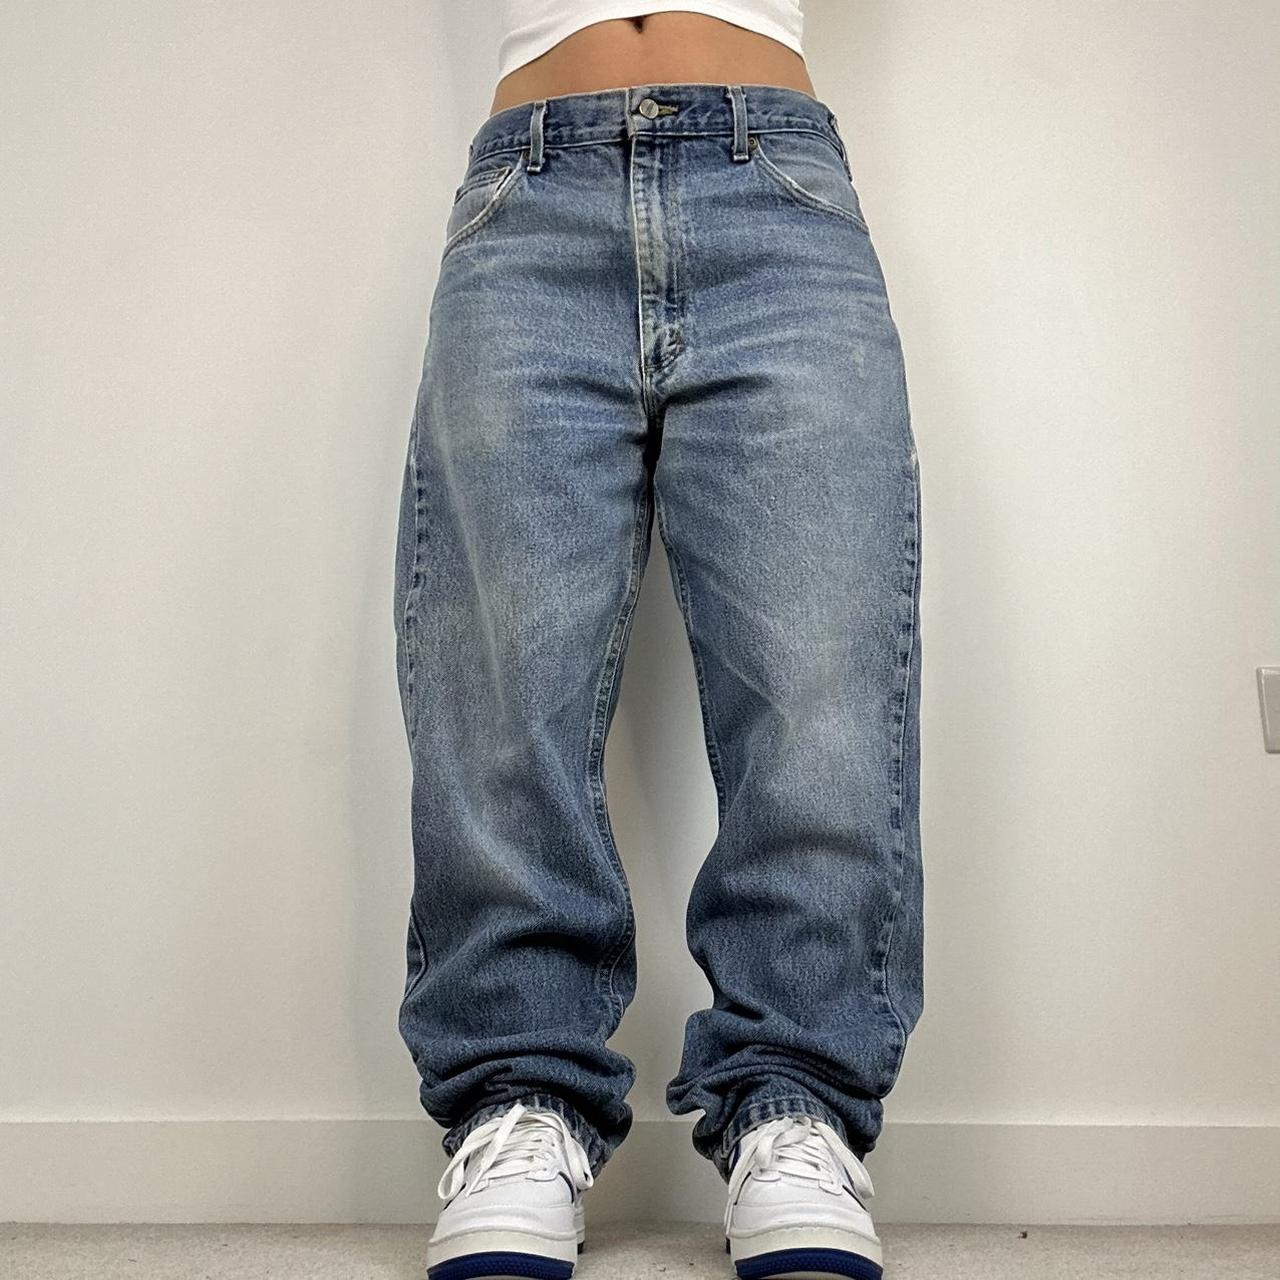 Vintage Carhartt slouch straight leg jeans - Shown... - Depop